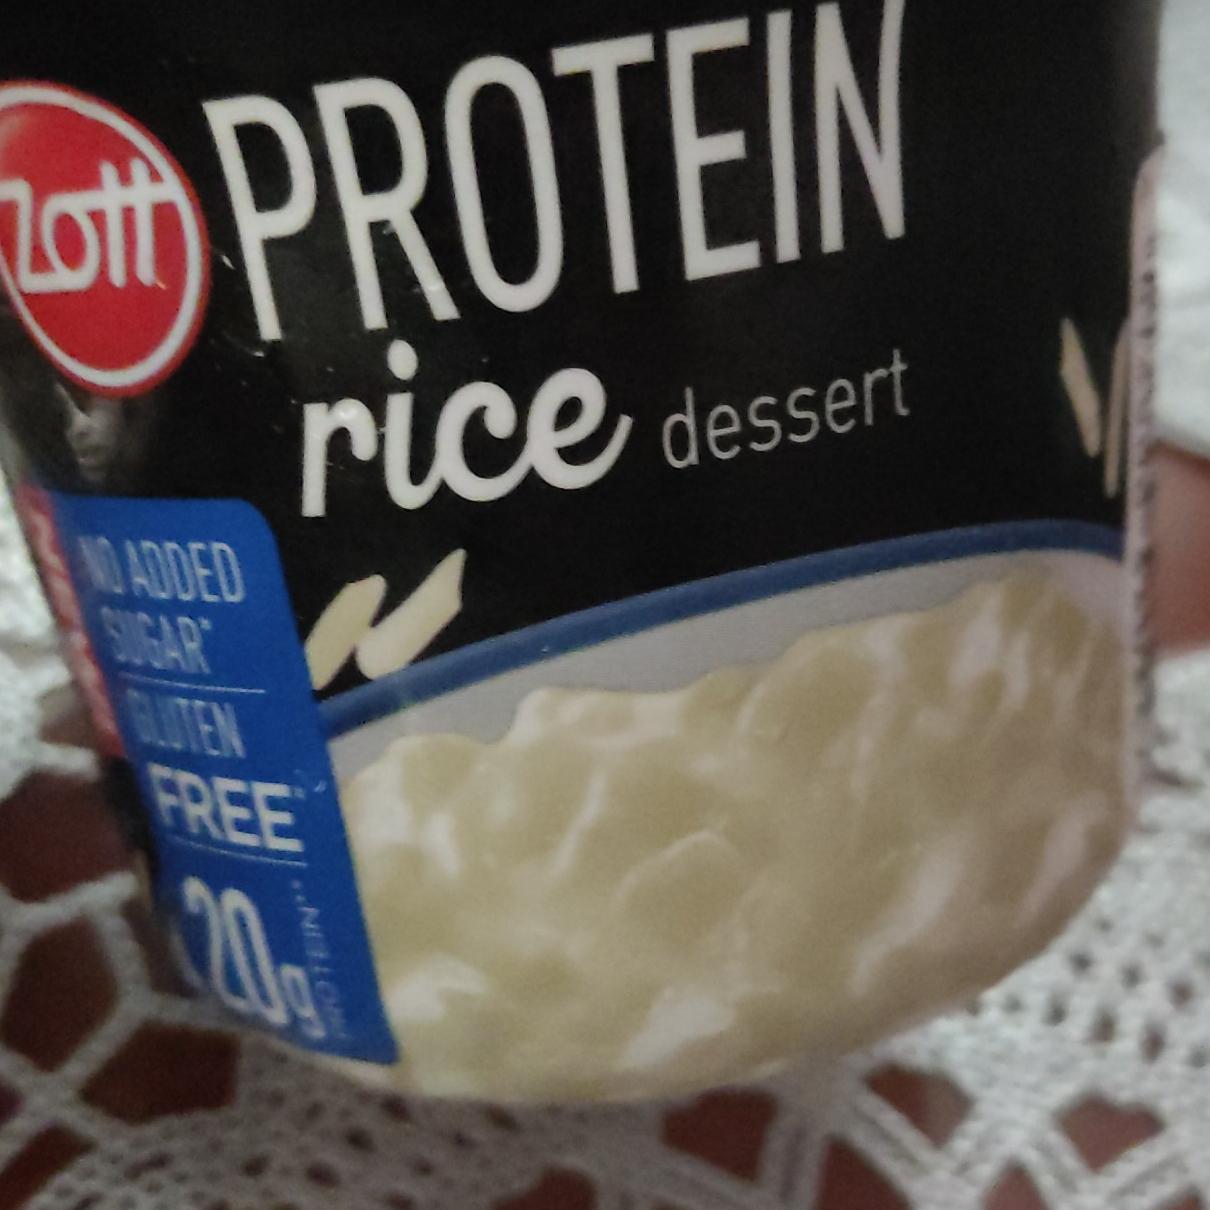 Фото - Protein Rice dessert Zott